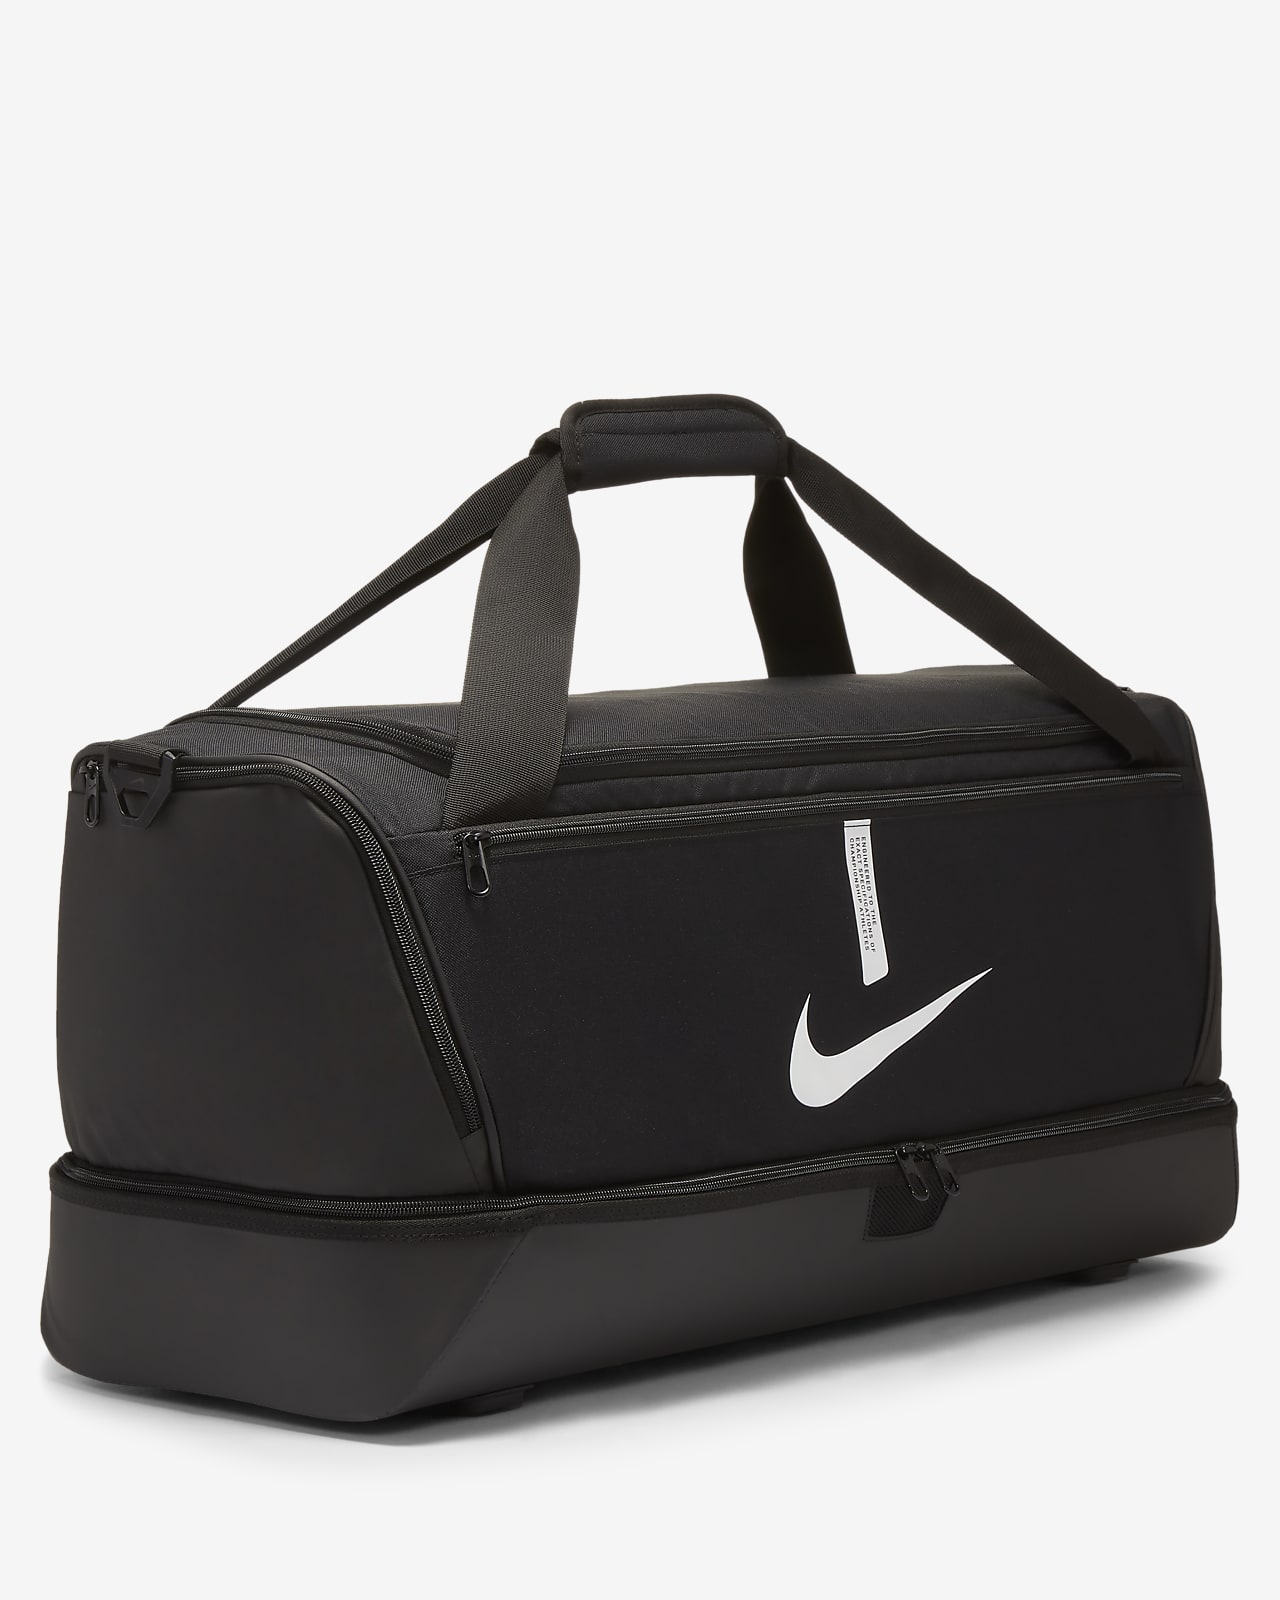 Nike Academy Team Football Hardcase Duffel Bag (Large, 59L). Nike BG